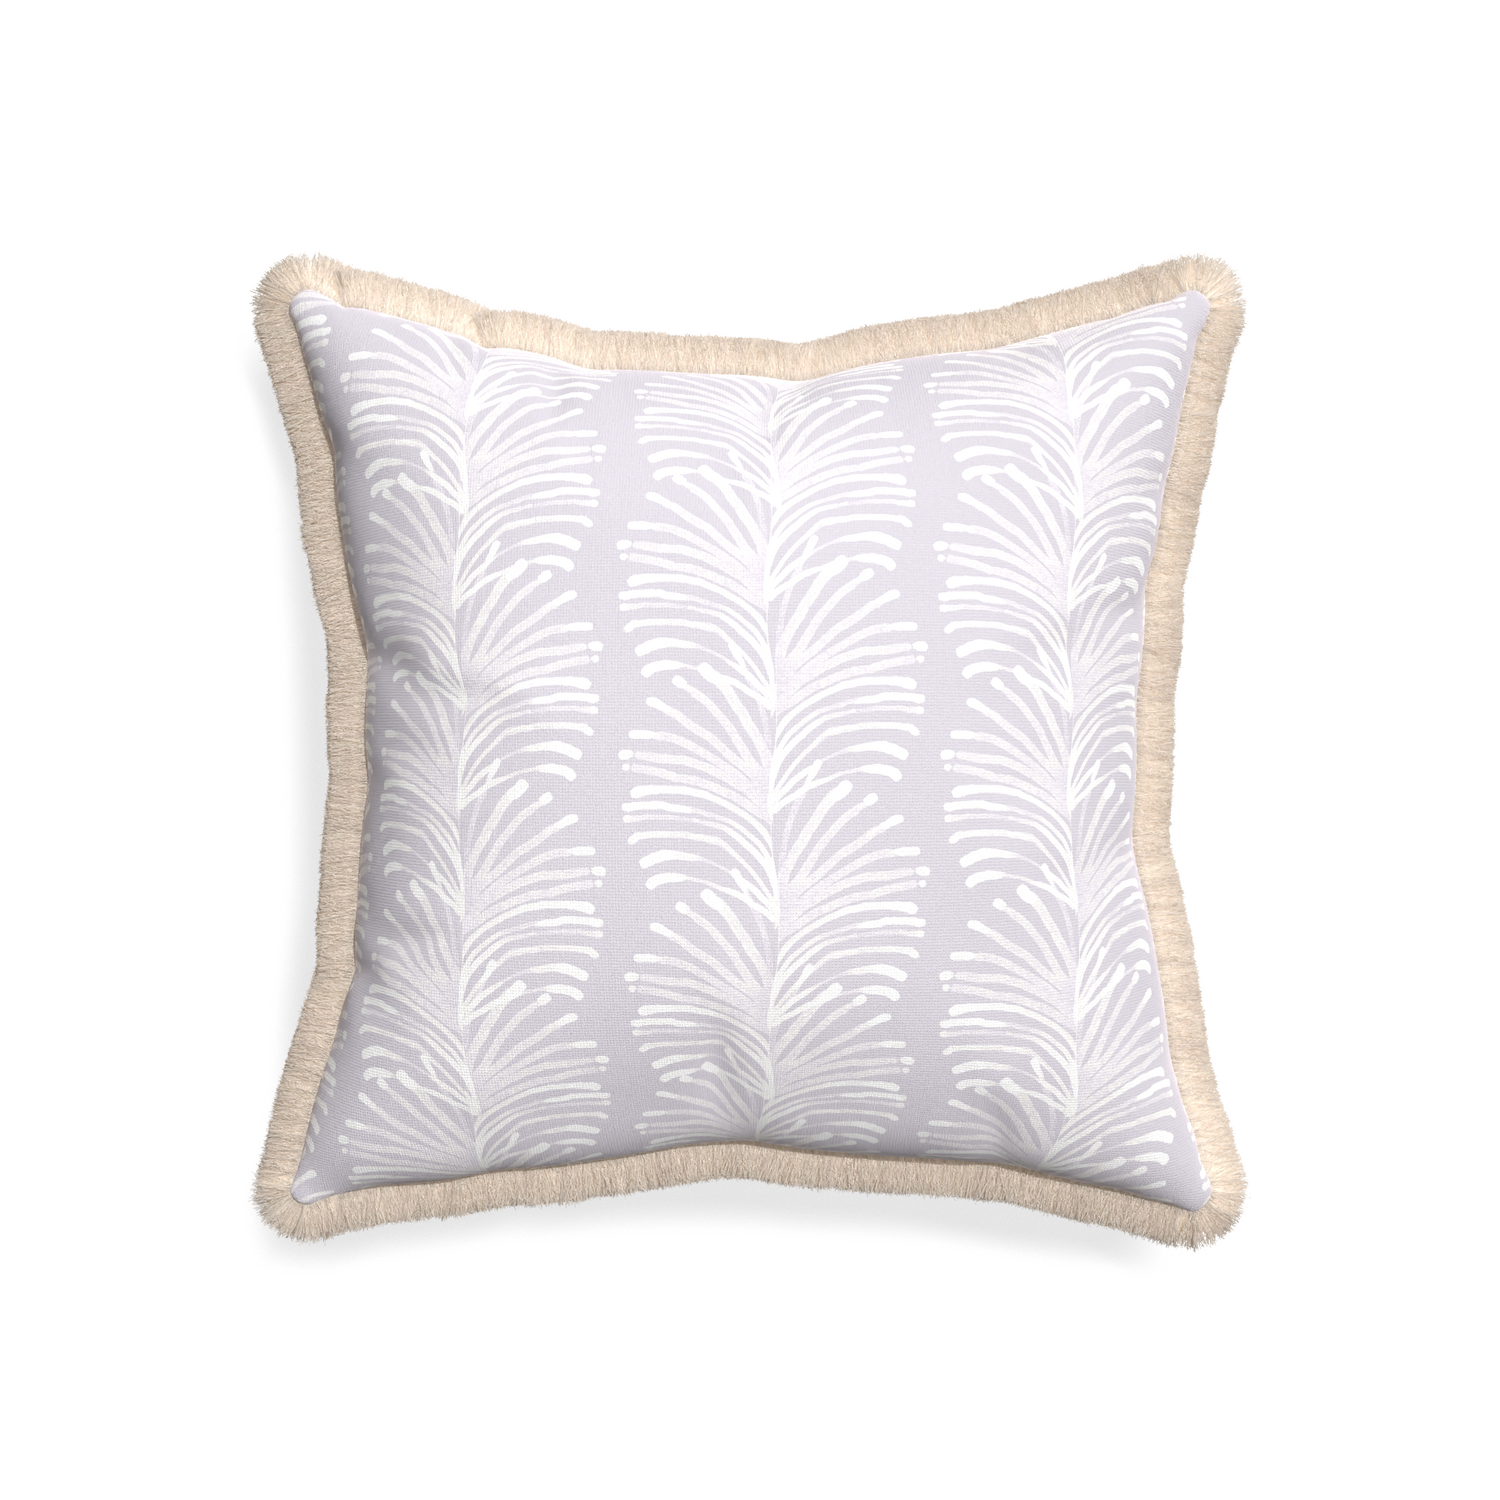 20-square emma lavender custom pillow with cream fringe on white background